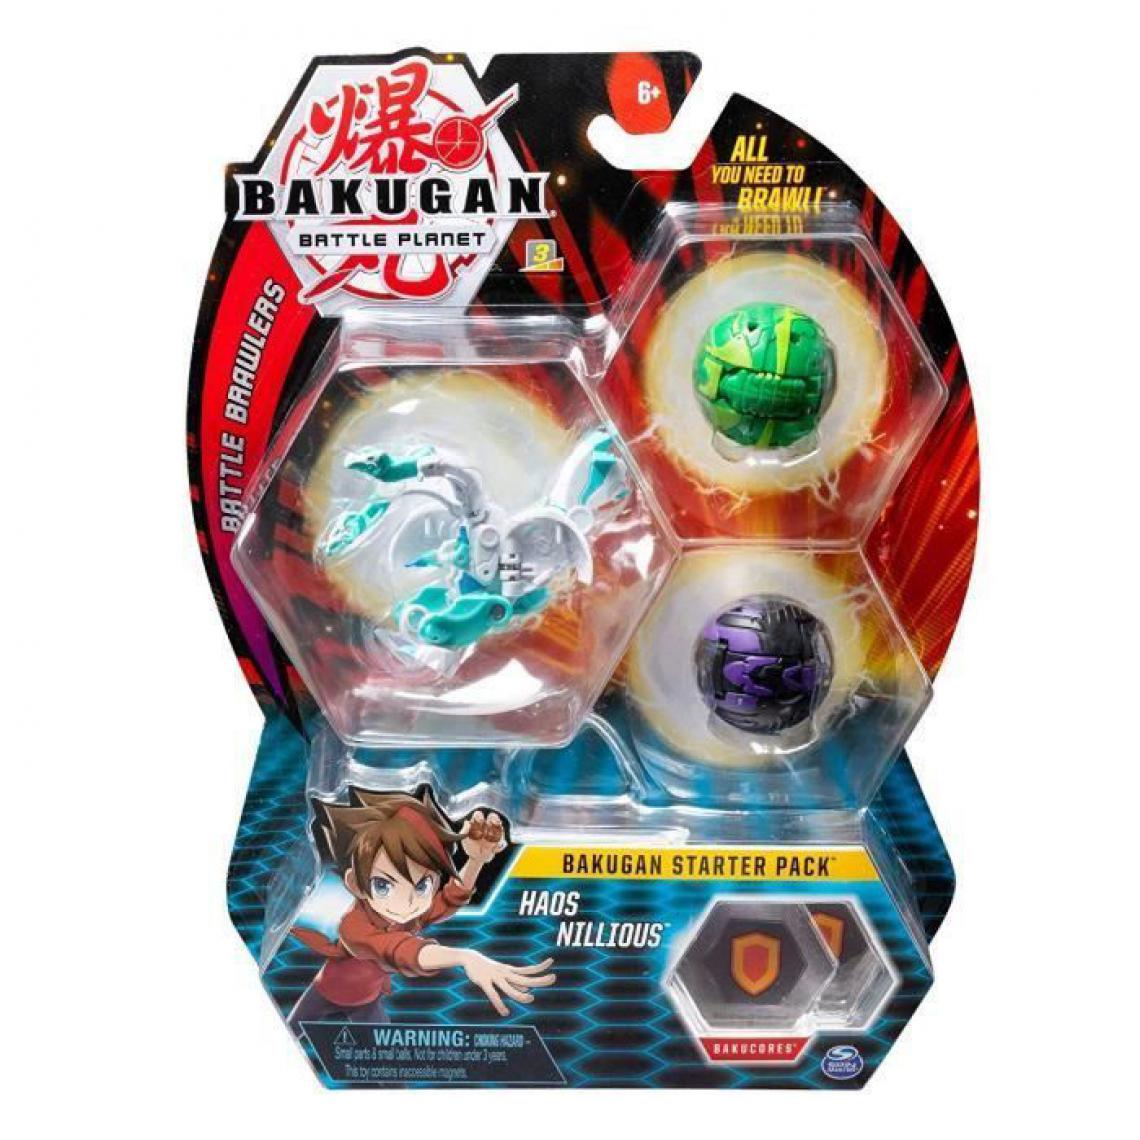 Bakugan - BAKUGAN Starter Pack - Modele 9 - Jeux de stratégie